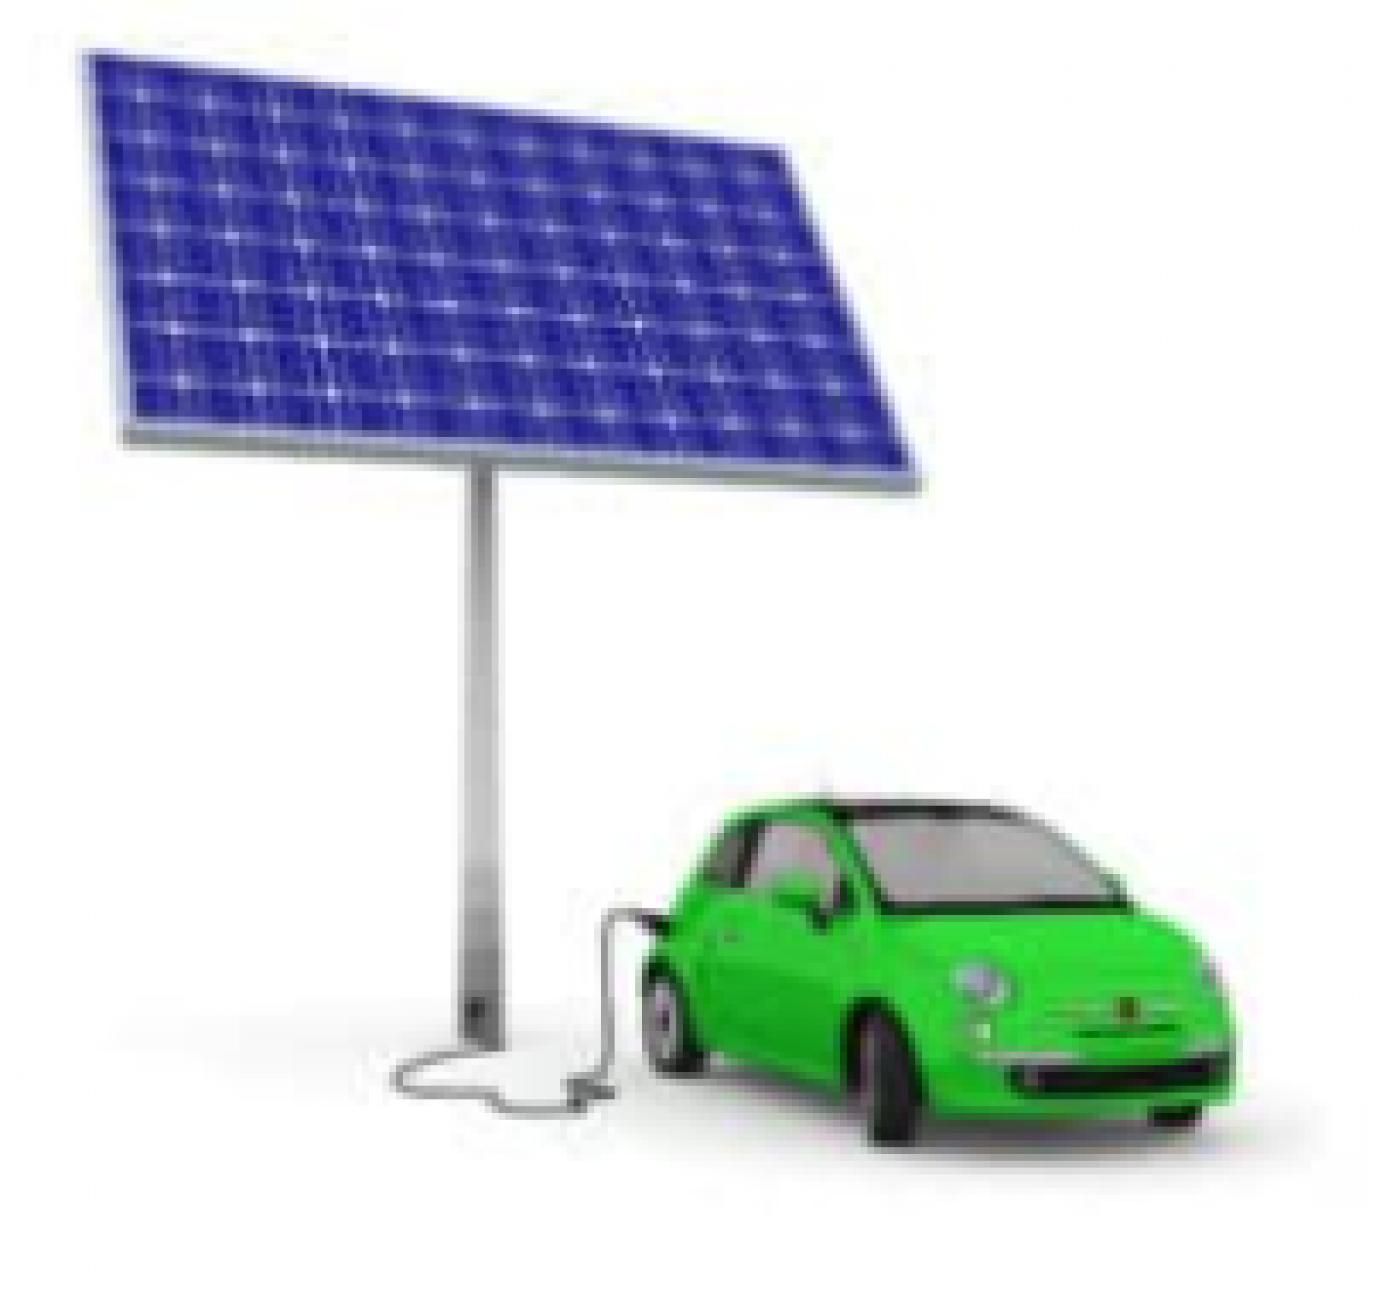 Grupo Sia solar installations